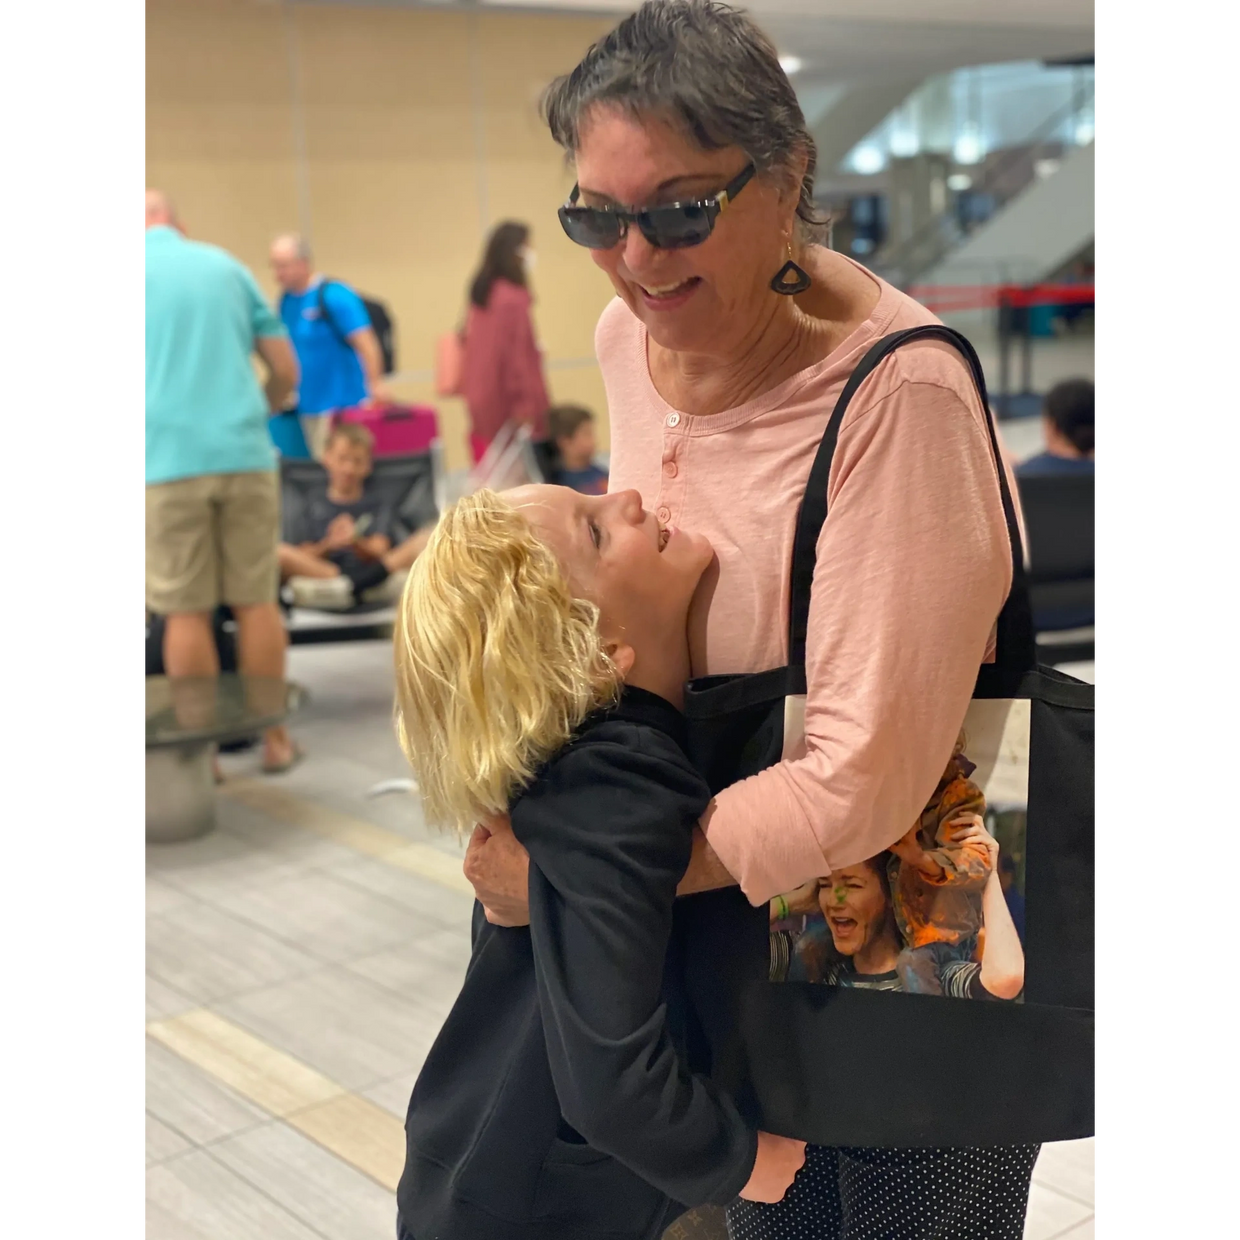 Spiritual Medium, Rosemary Altea embraces her grandson the airport.